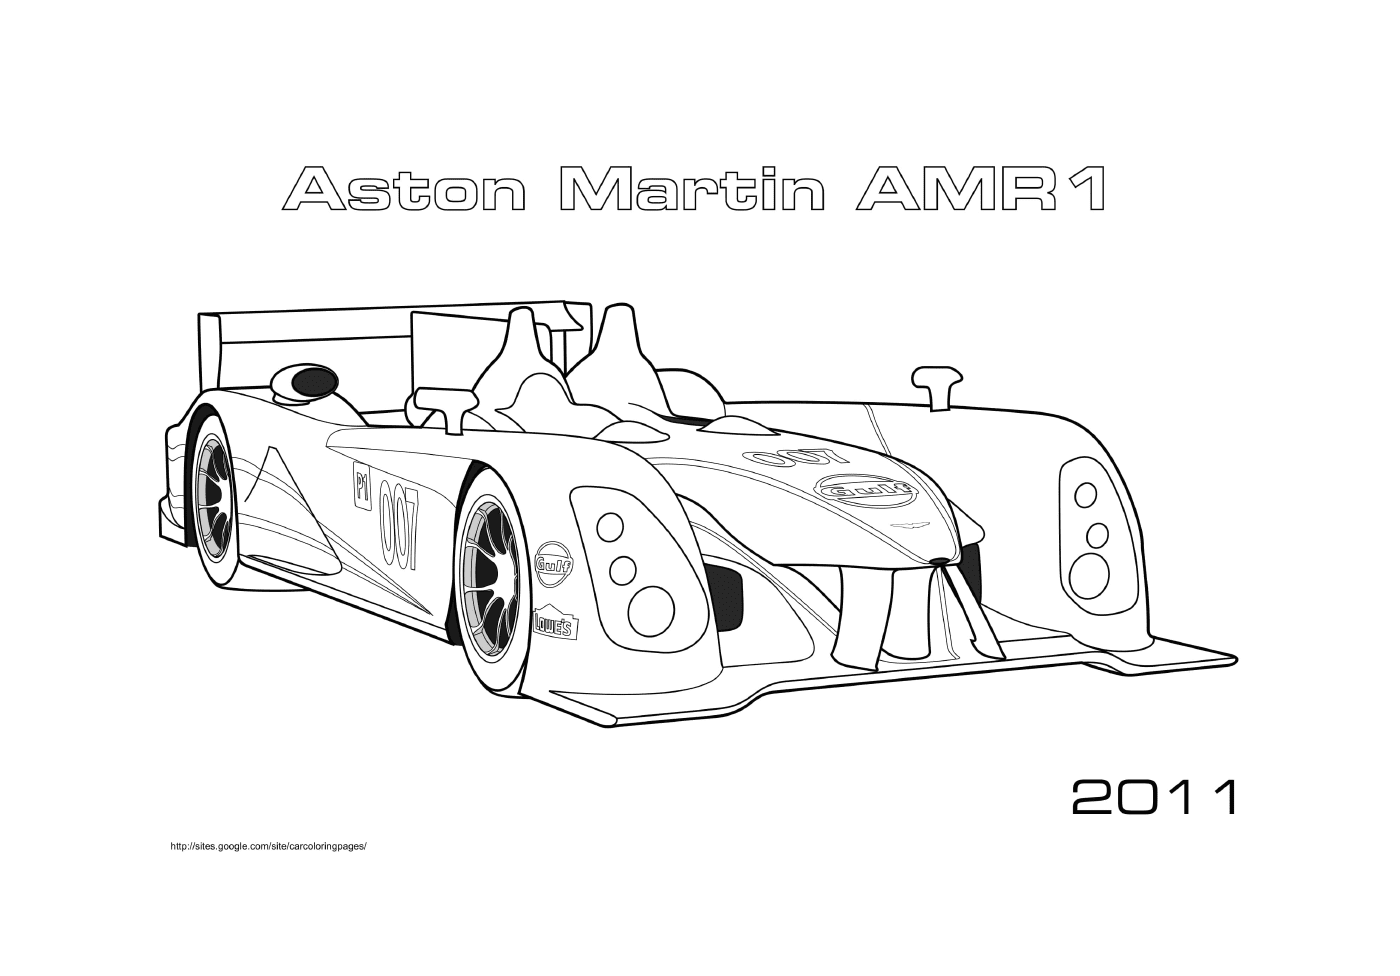  Aston Martin Amr1 de 2011 